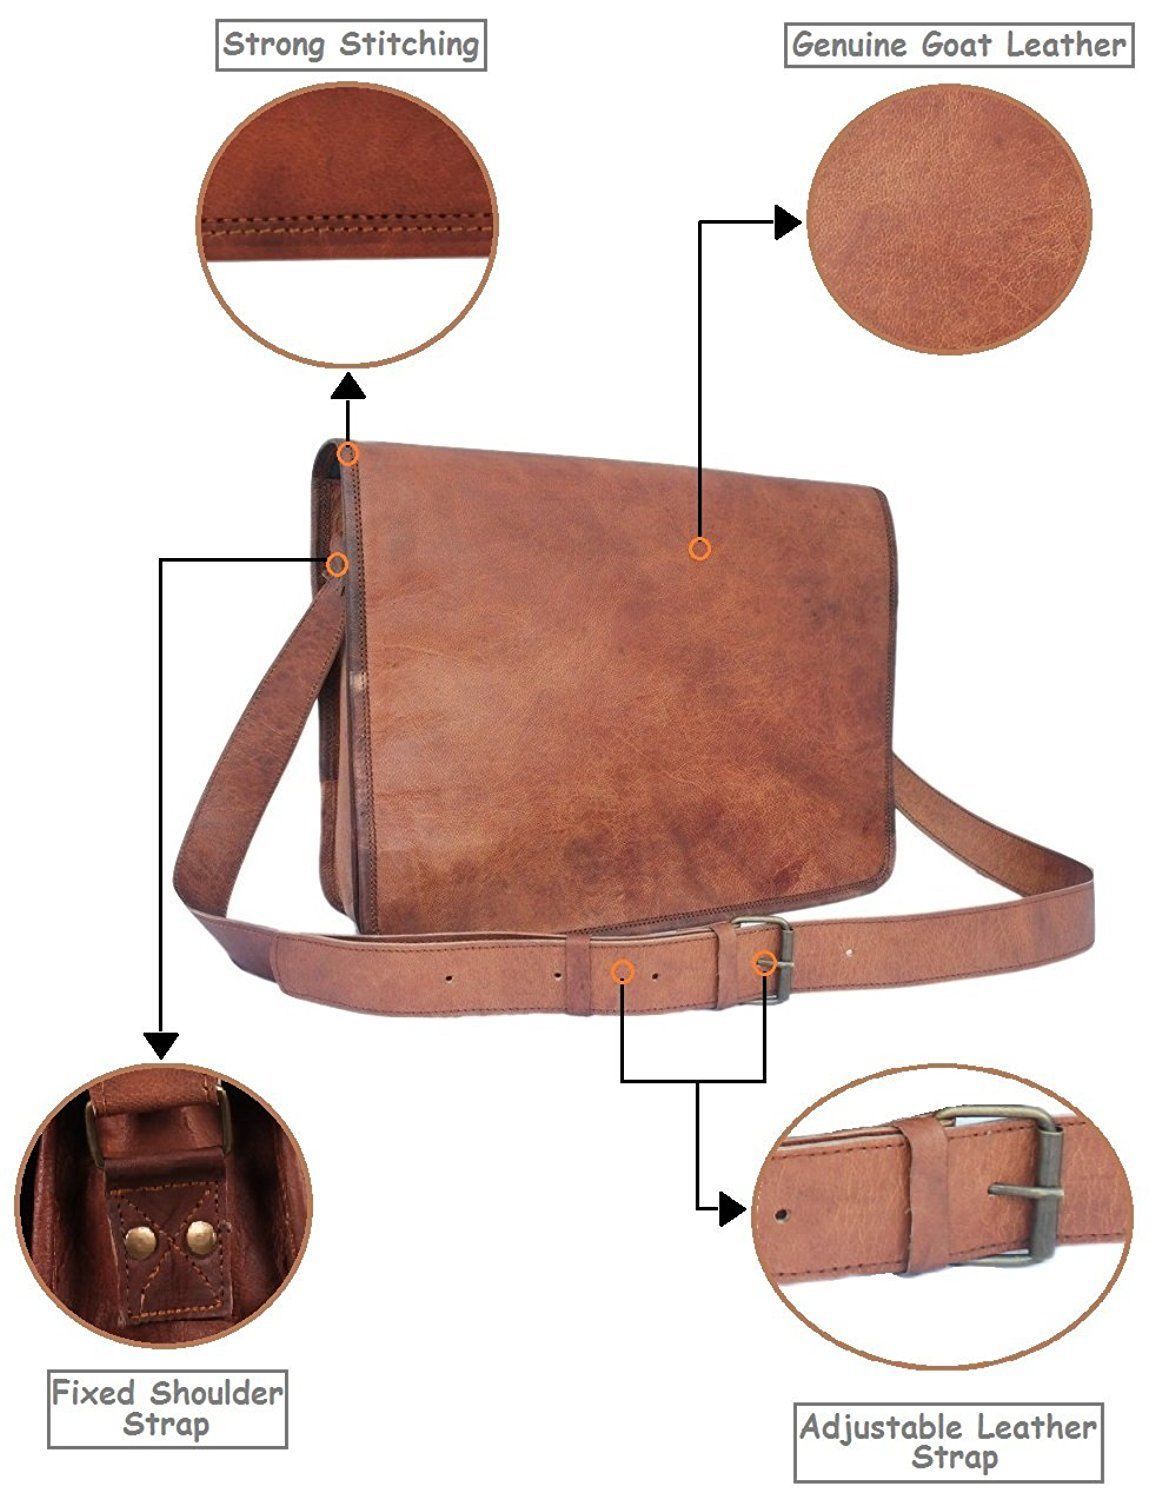 16" Handmade Brown Leather Mgessenger Bag Laptop Mac Book Travel Cross body Bag - $36.40 - $67.62